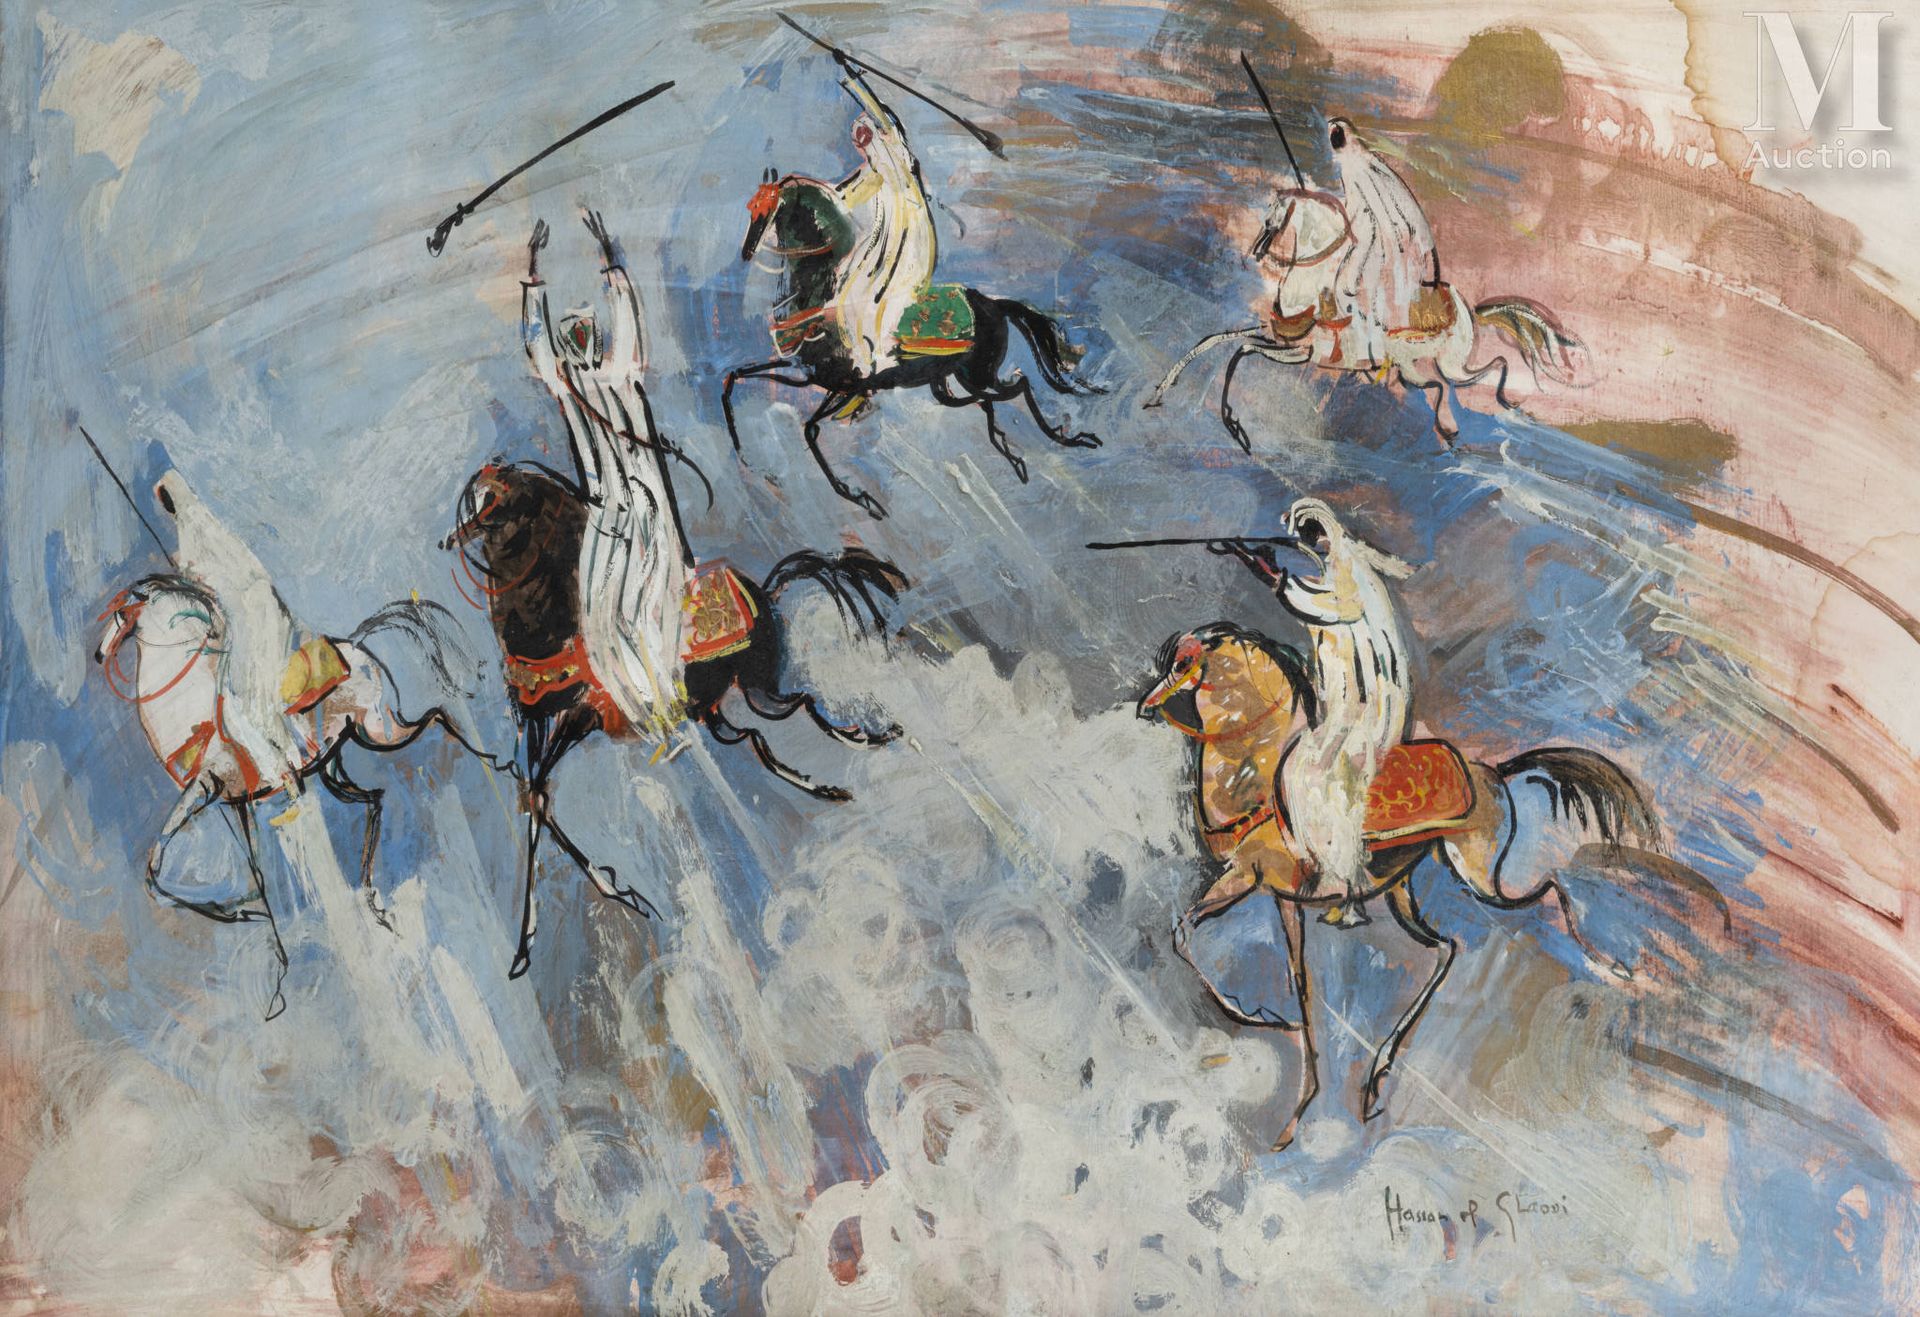 Hassan EL GLAOUI (1923-2018) Riders on a blue background
Mixed media on cardboar&hellip;